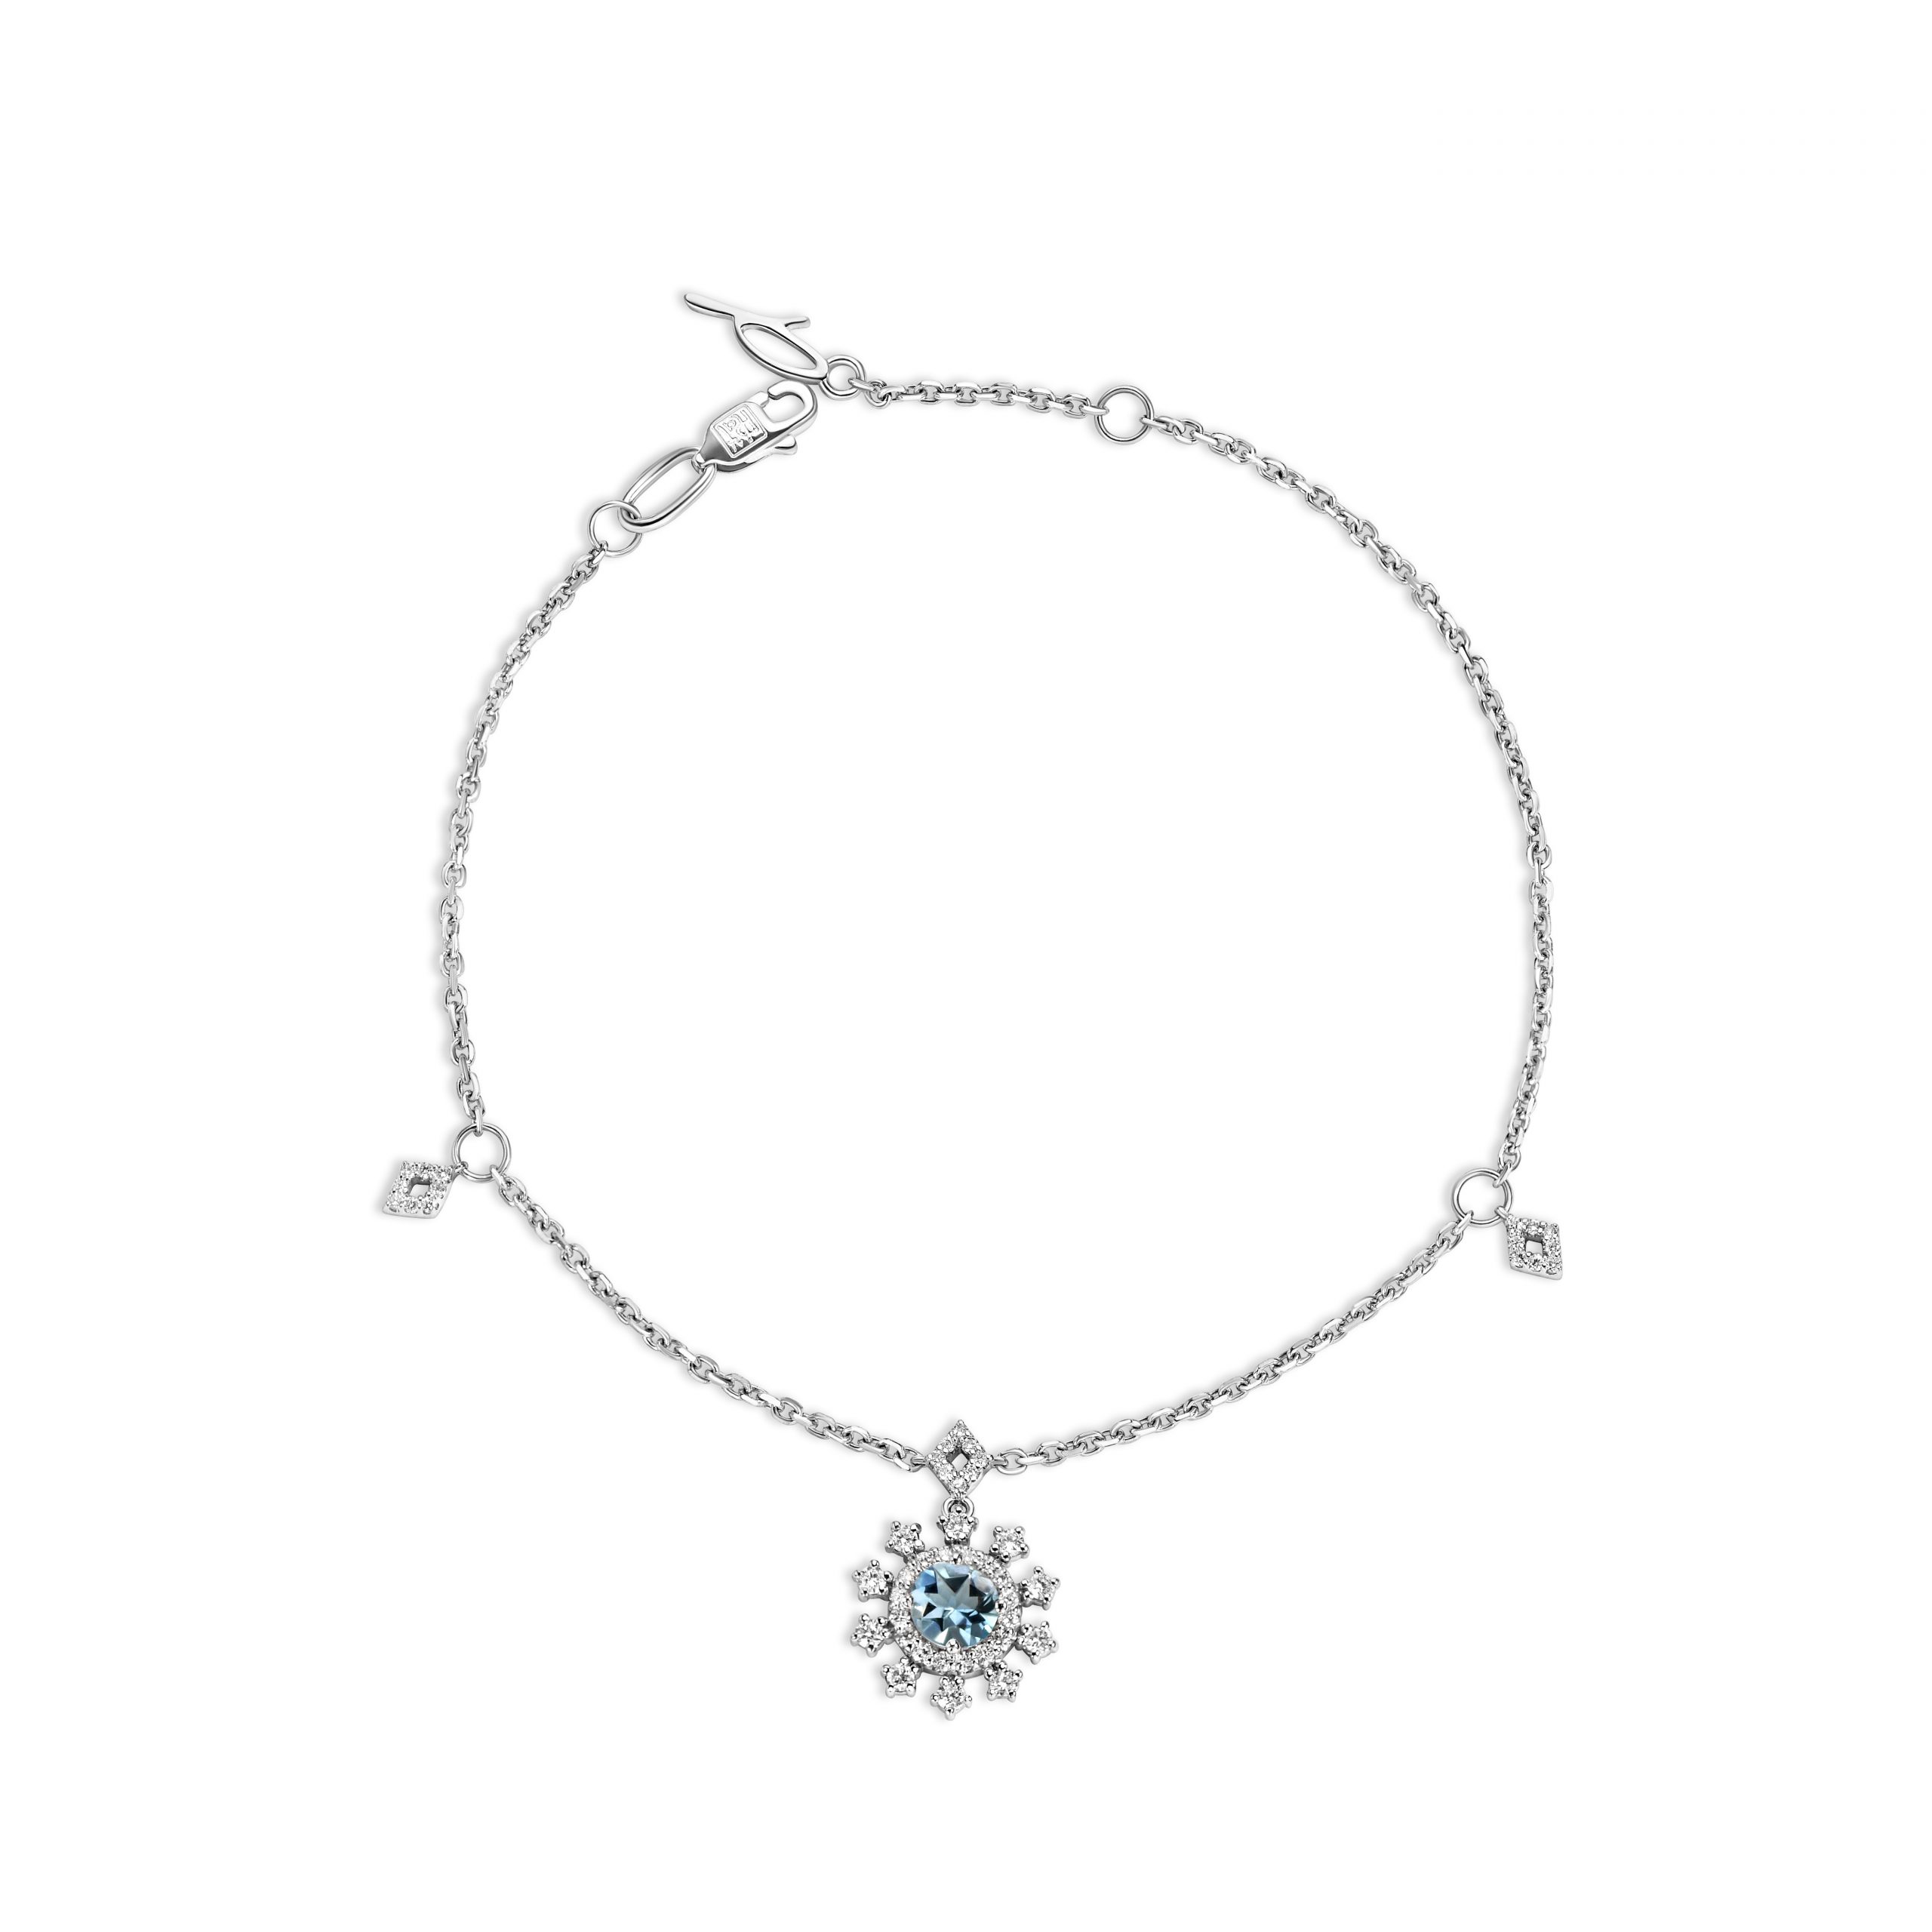 Bracelet with aquamarine and diamonds #1